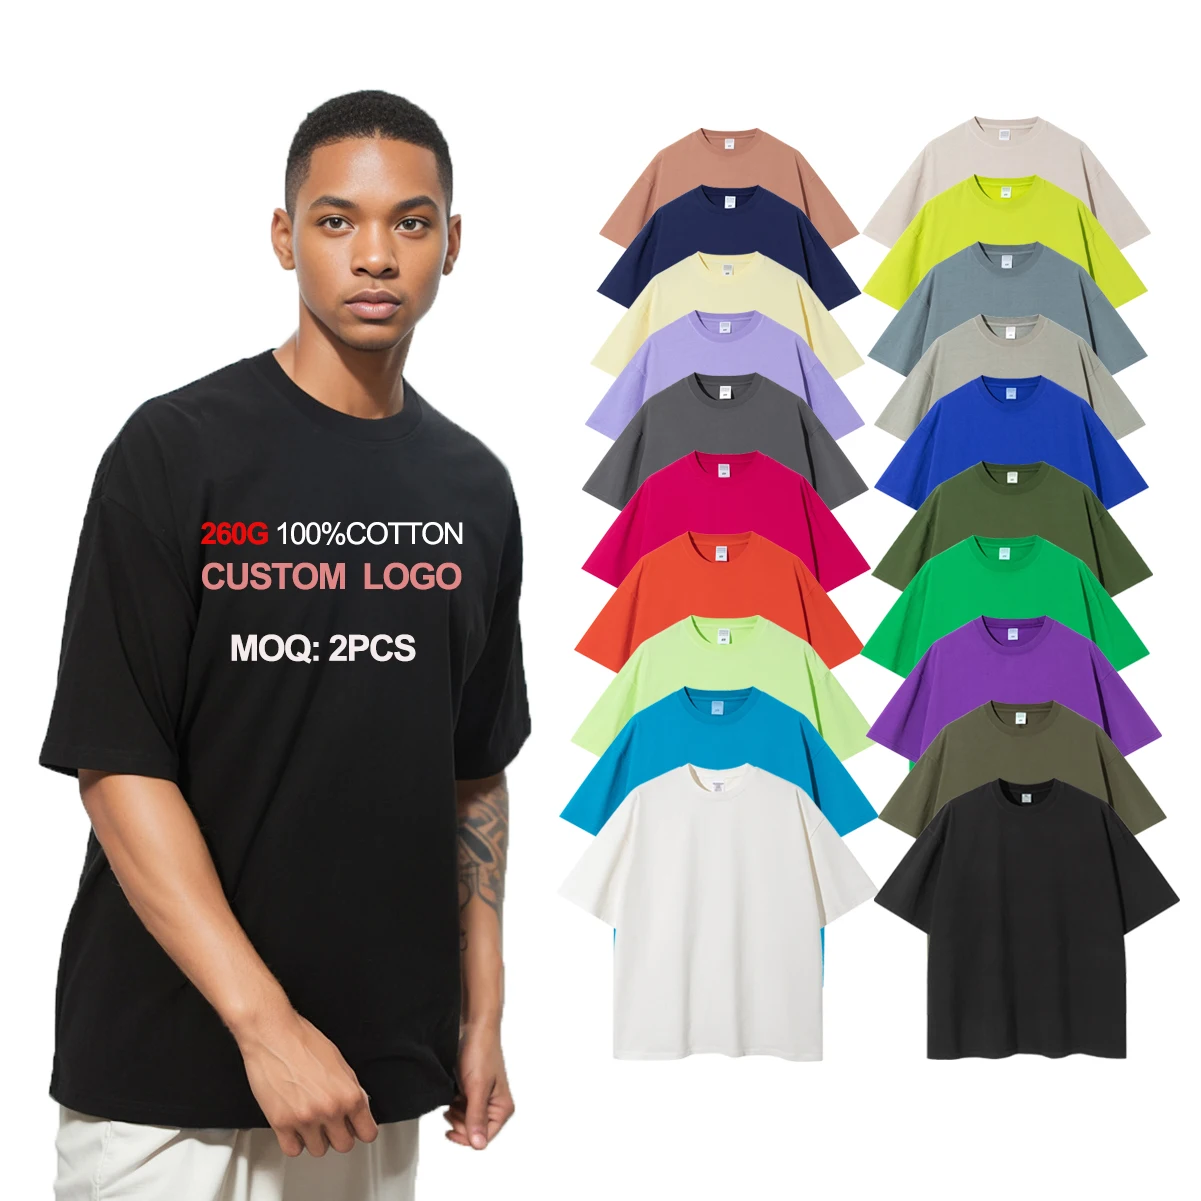 DUOLLB 260G Custom graphic Man tshirt Oversized 100% cotton Dropped Shoulder tshirts with logo custom logo printed For Men